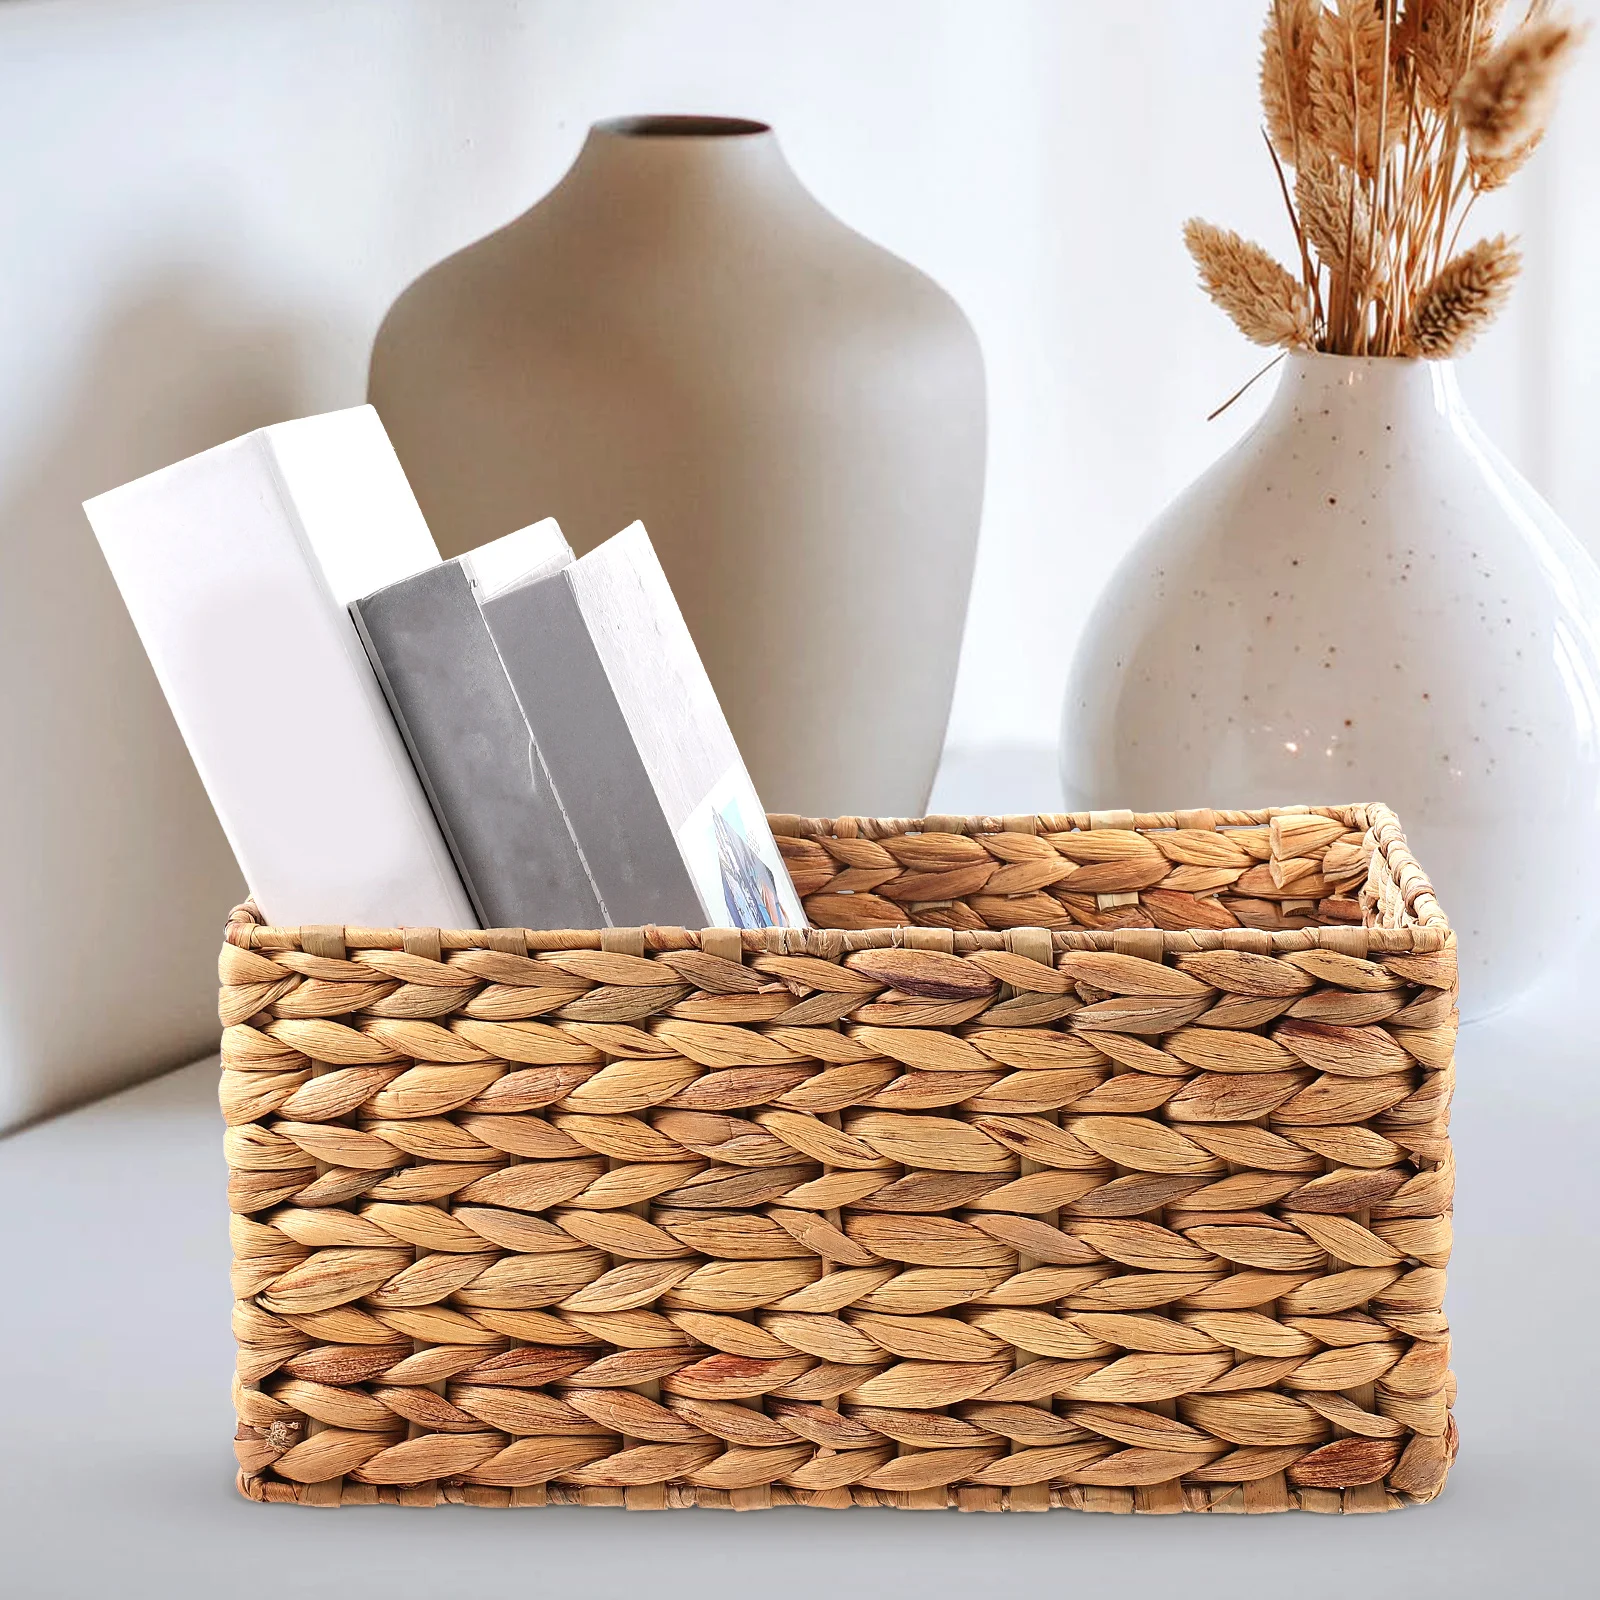 Storage Basket Baskets Wicker Woven Bins Organizer Toilet Paper for Shelves Grass Rectangular Shelf Decorative Child Hyacinth